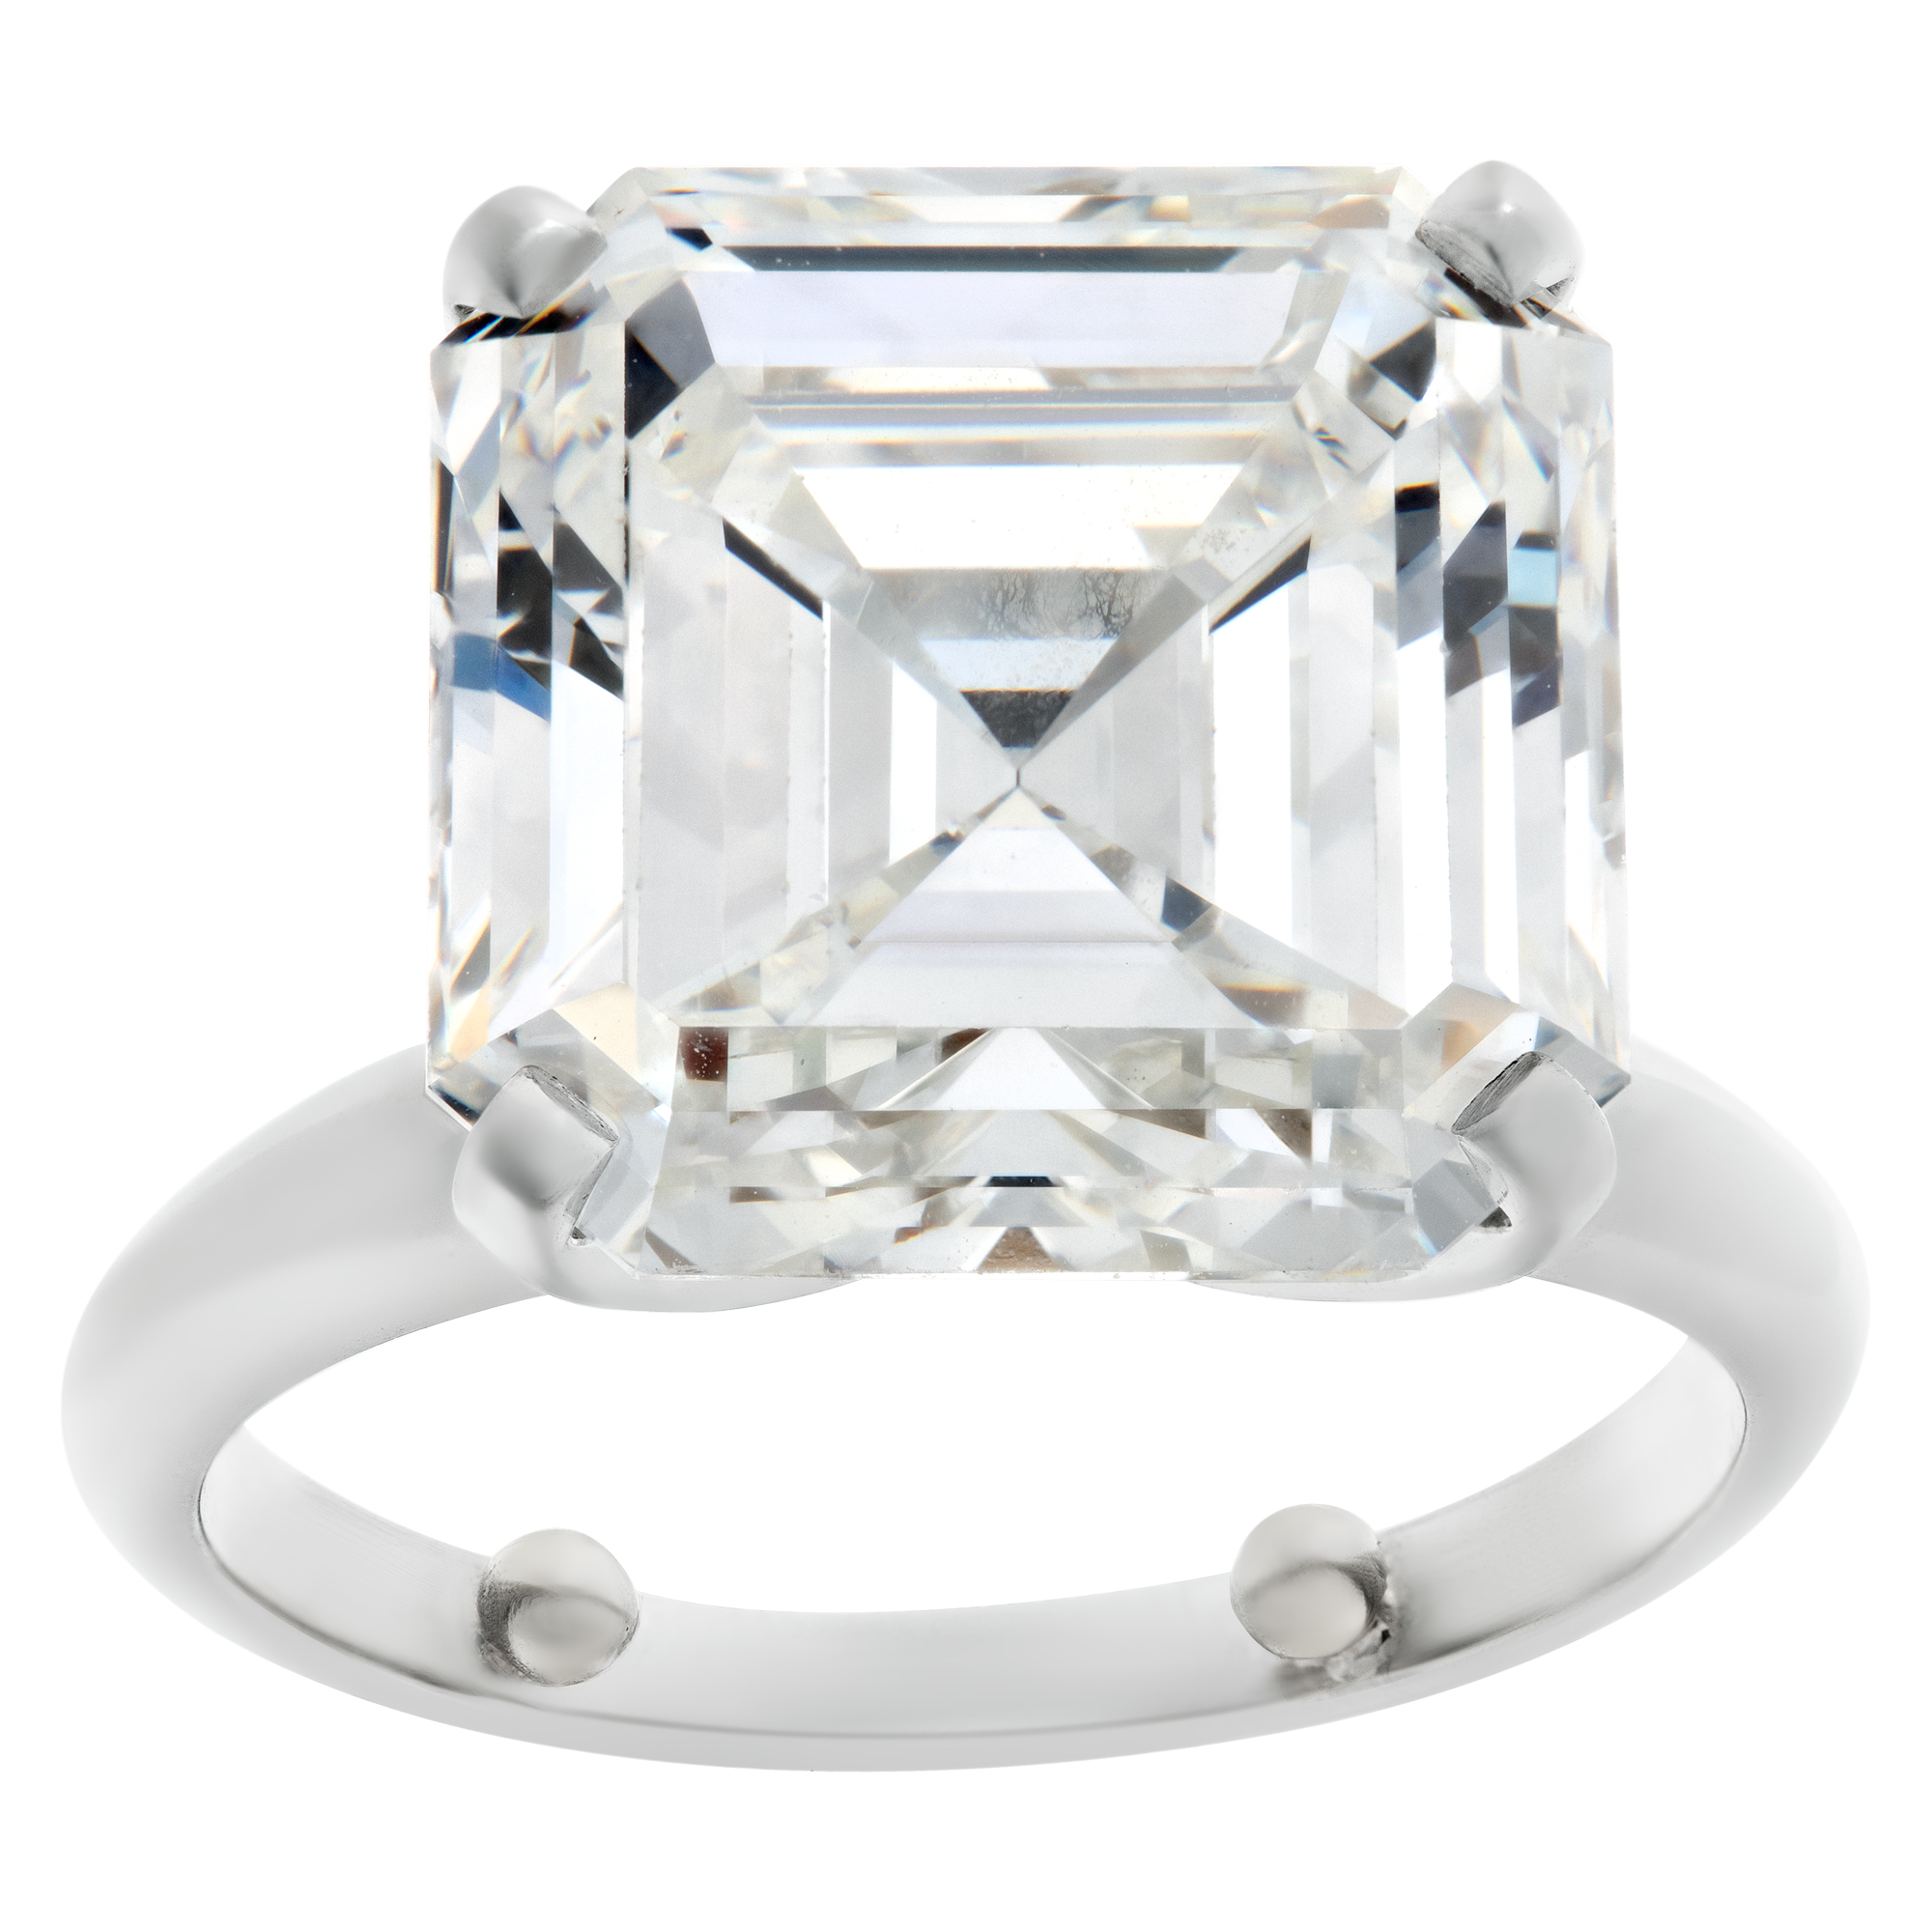 GIA certified asscher cut diamond 9.03 carat (G Color, Vs 1 Clarity) ring